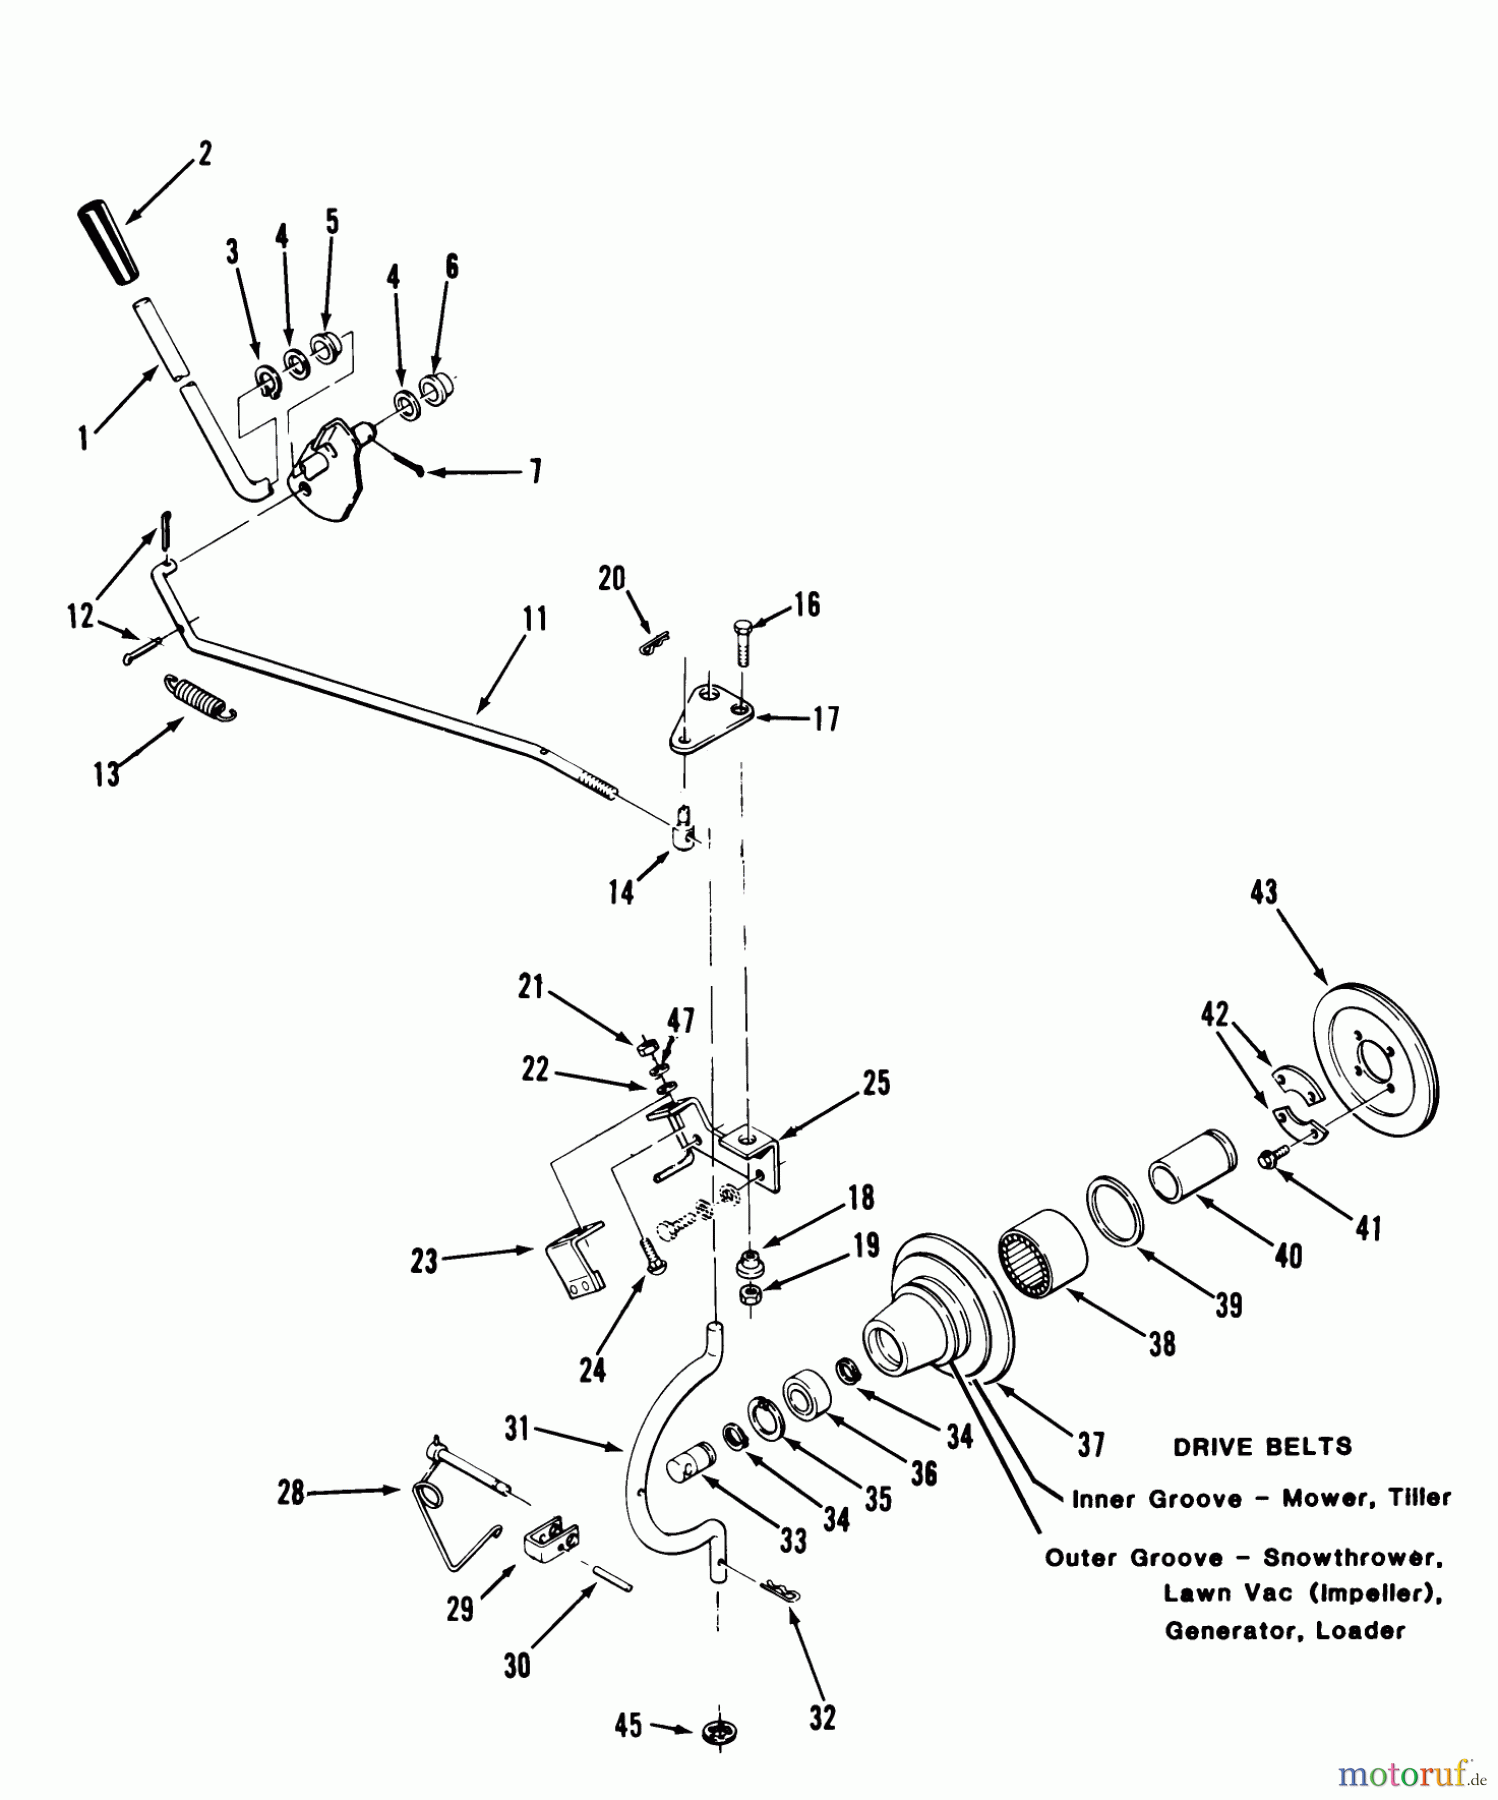  Toro Neu Mowers, Lawn & Garden Tractor Seite 1 31-16OE01 (516-H) - Toro 516-H Garden Tractor, 1988 PTO CLUTCH AND CONTROL